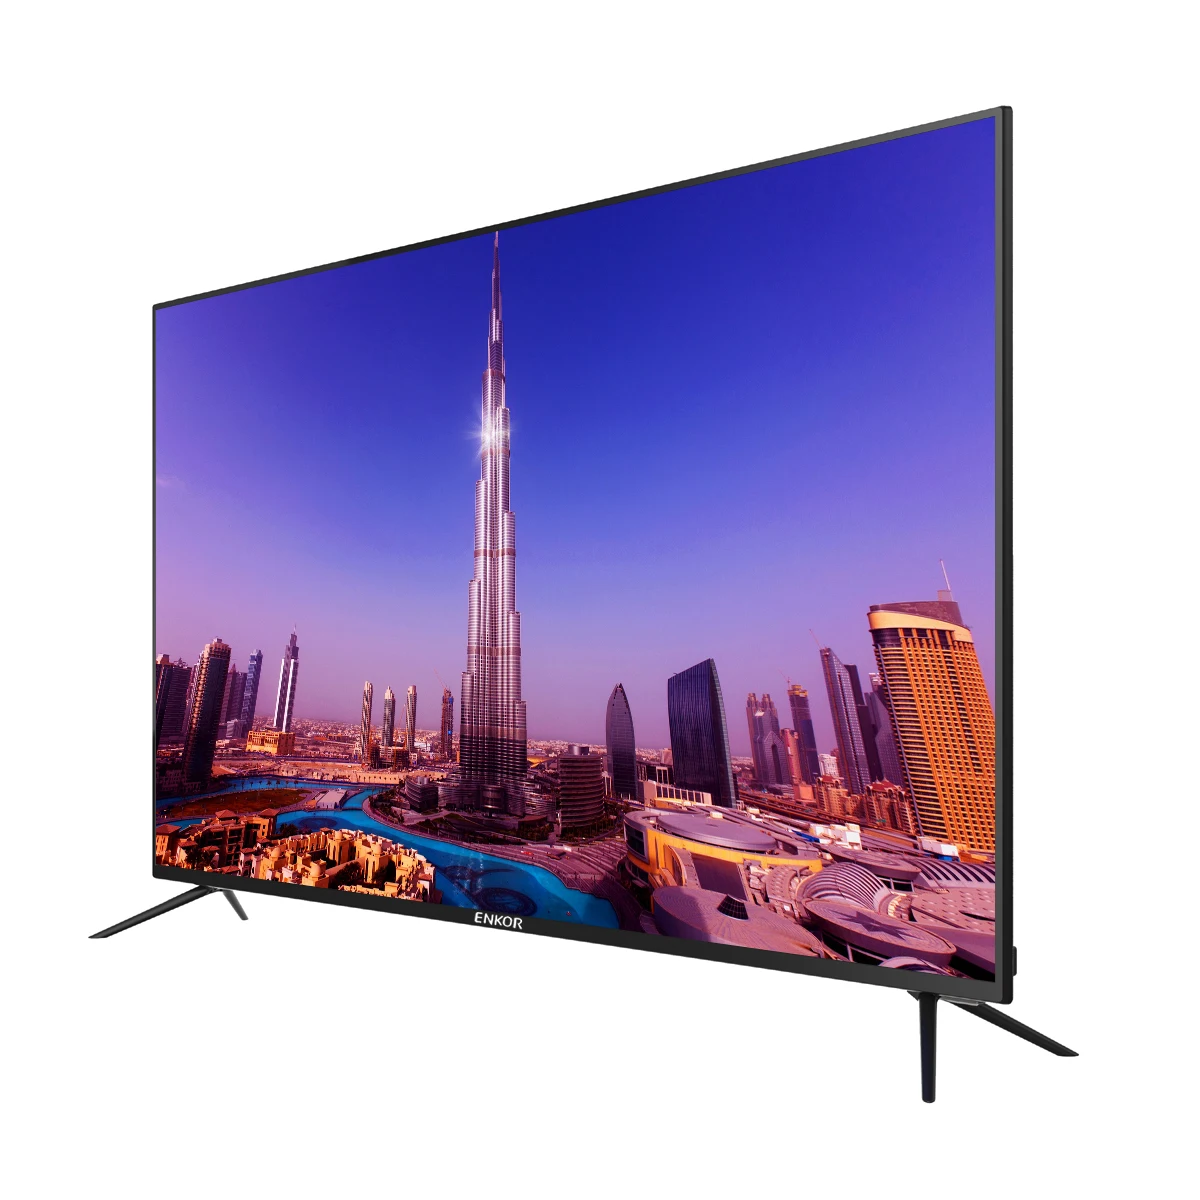 
Led Телевизор маленькая рамка 32 дюймов электронно телевизор с плоским экраном 4K смарт 3D ЖК Dled ТВ  (62295677244)